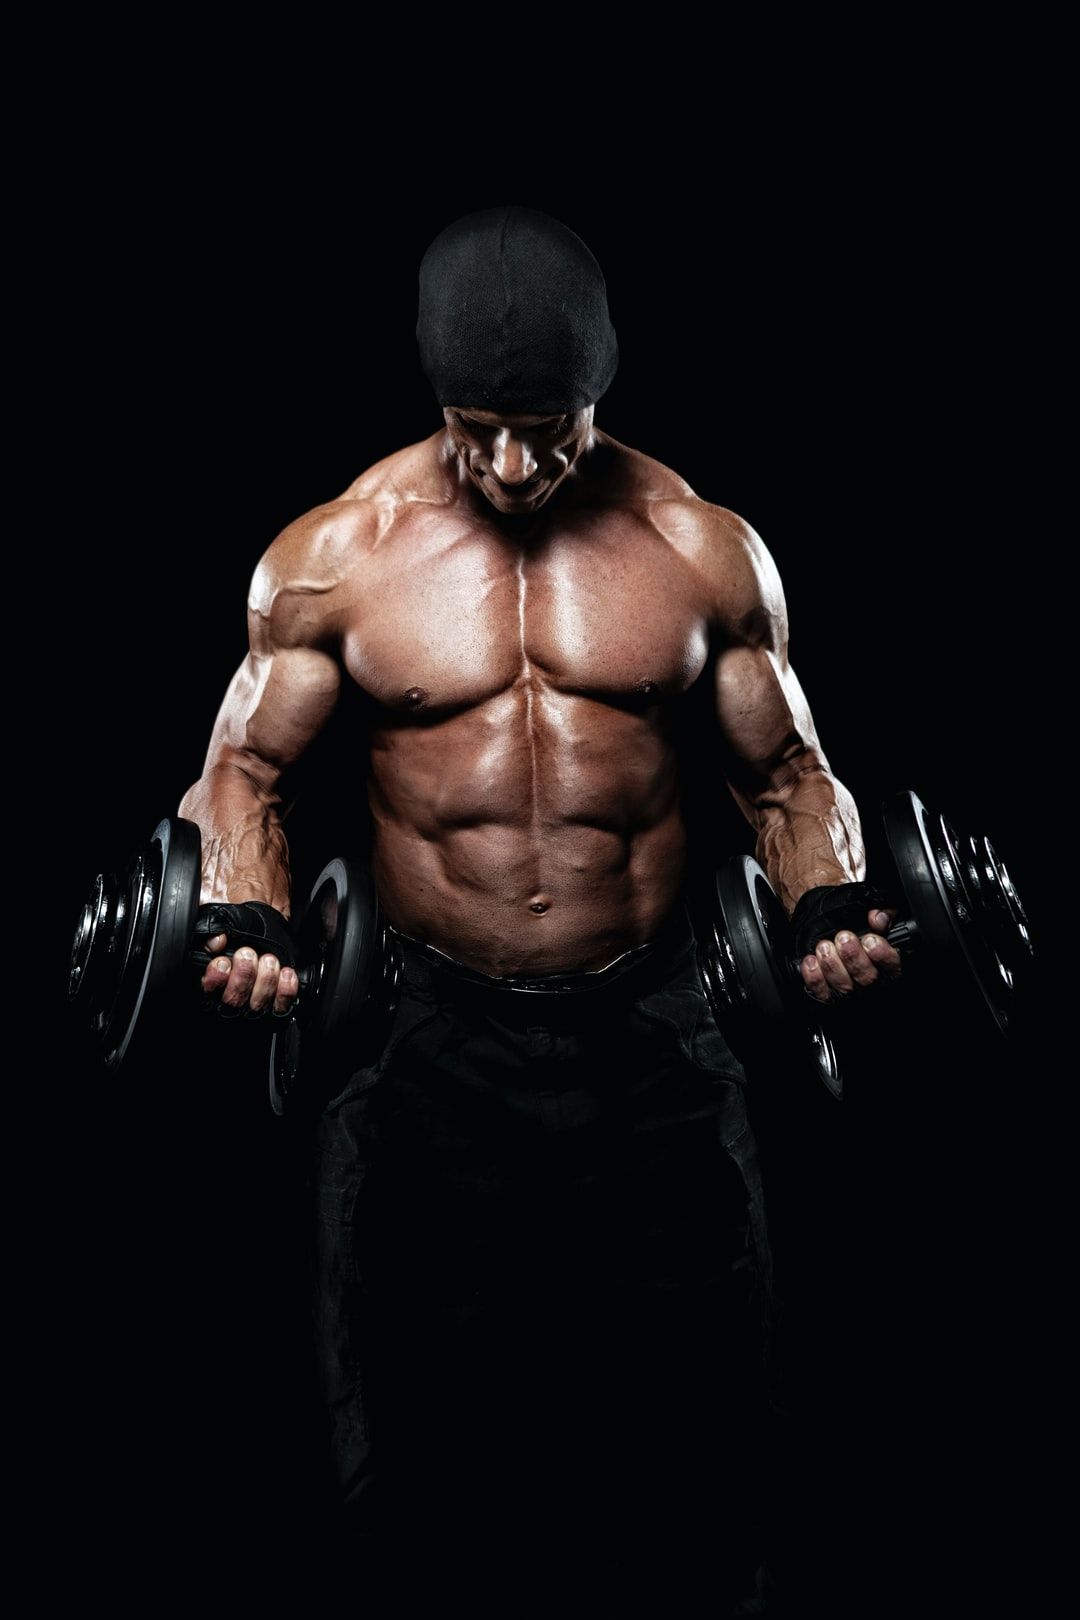 Bodybuilder Photo [HD]. Download Free Image